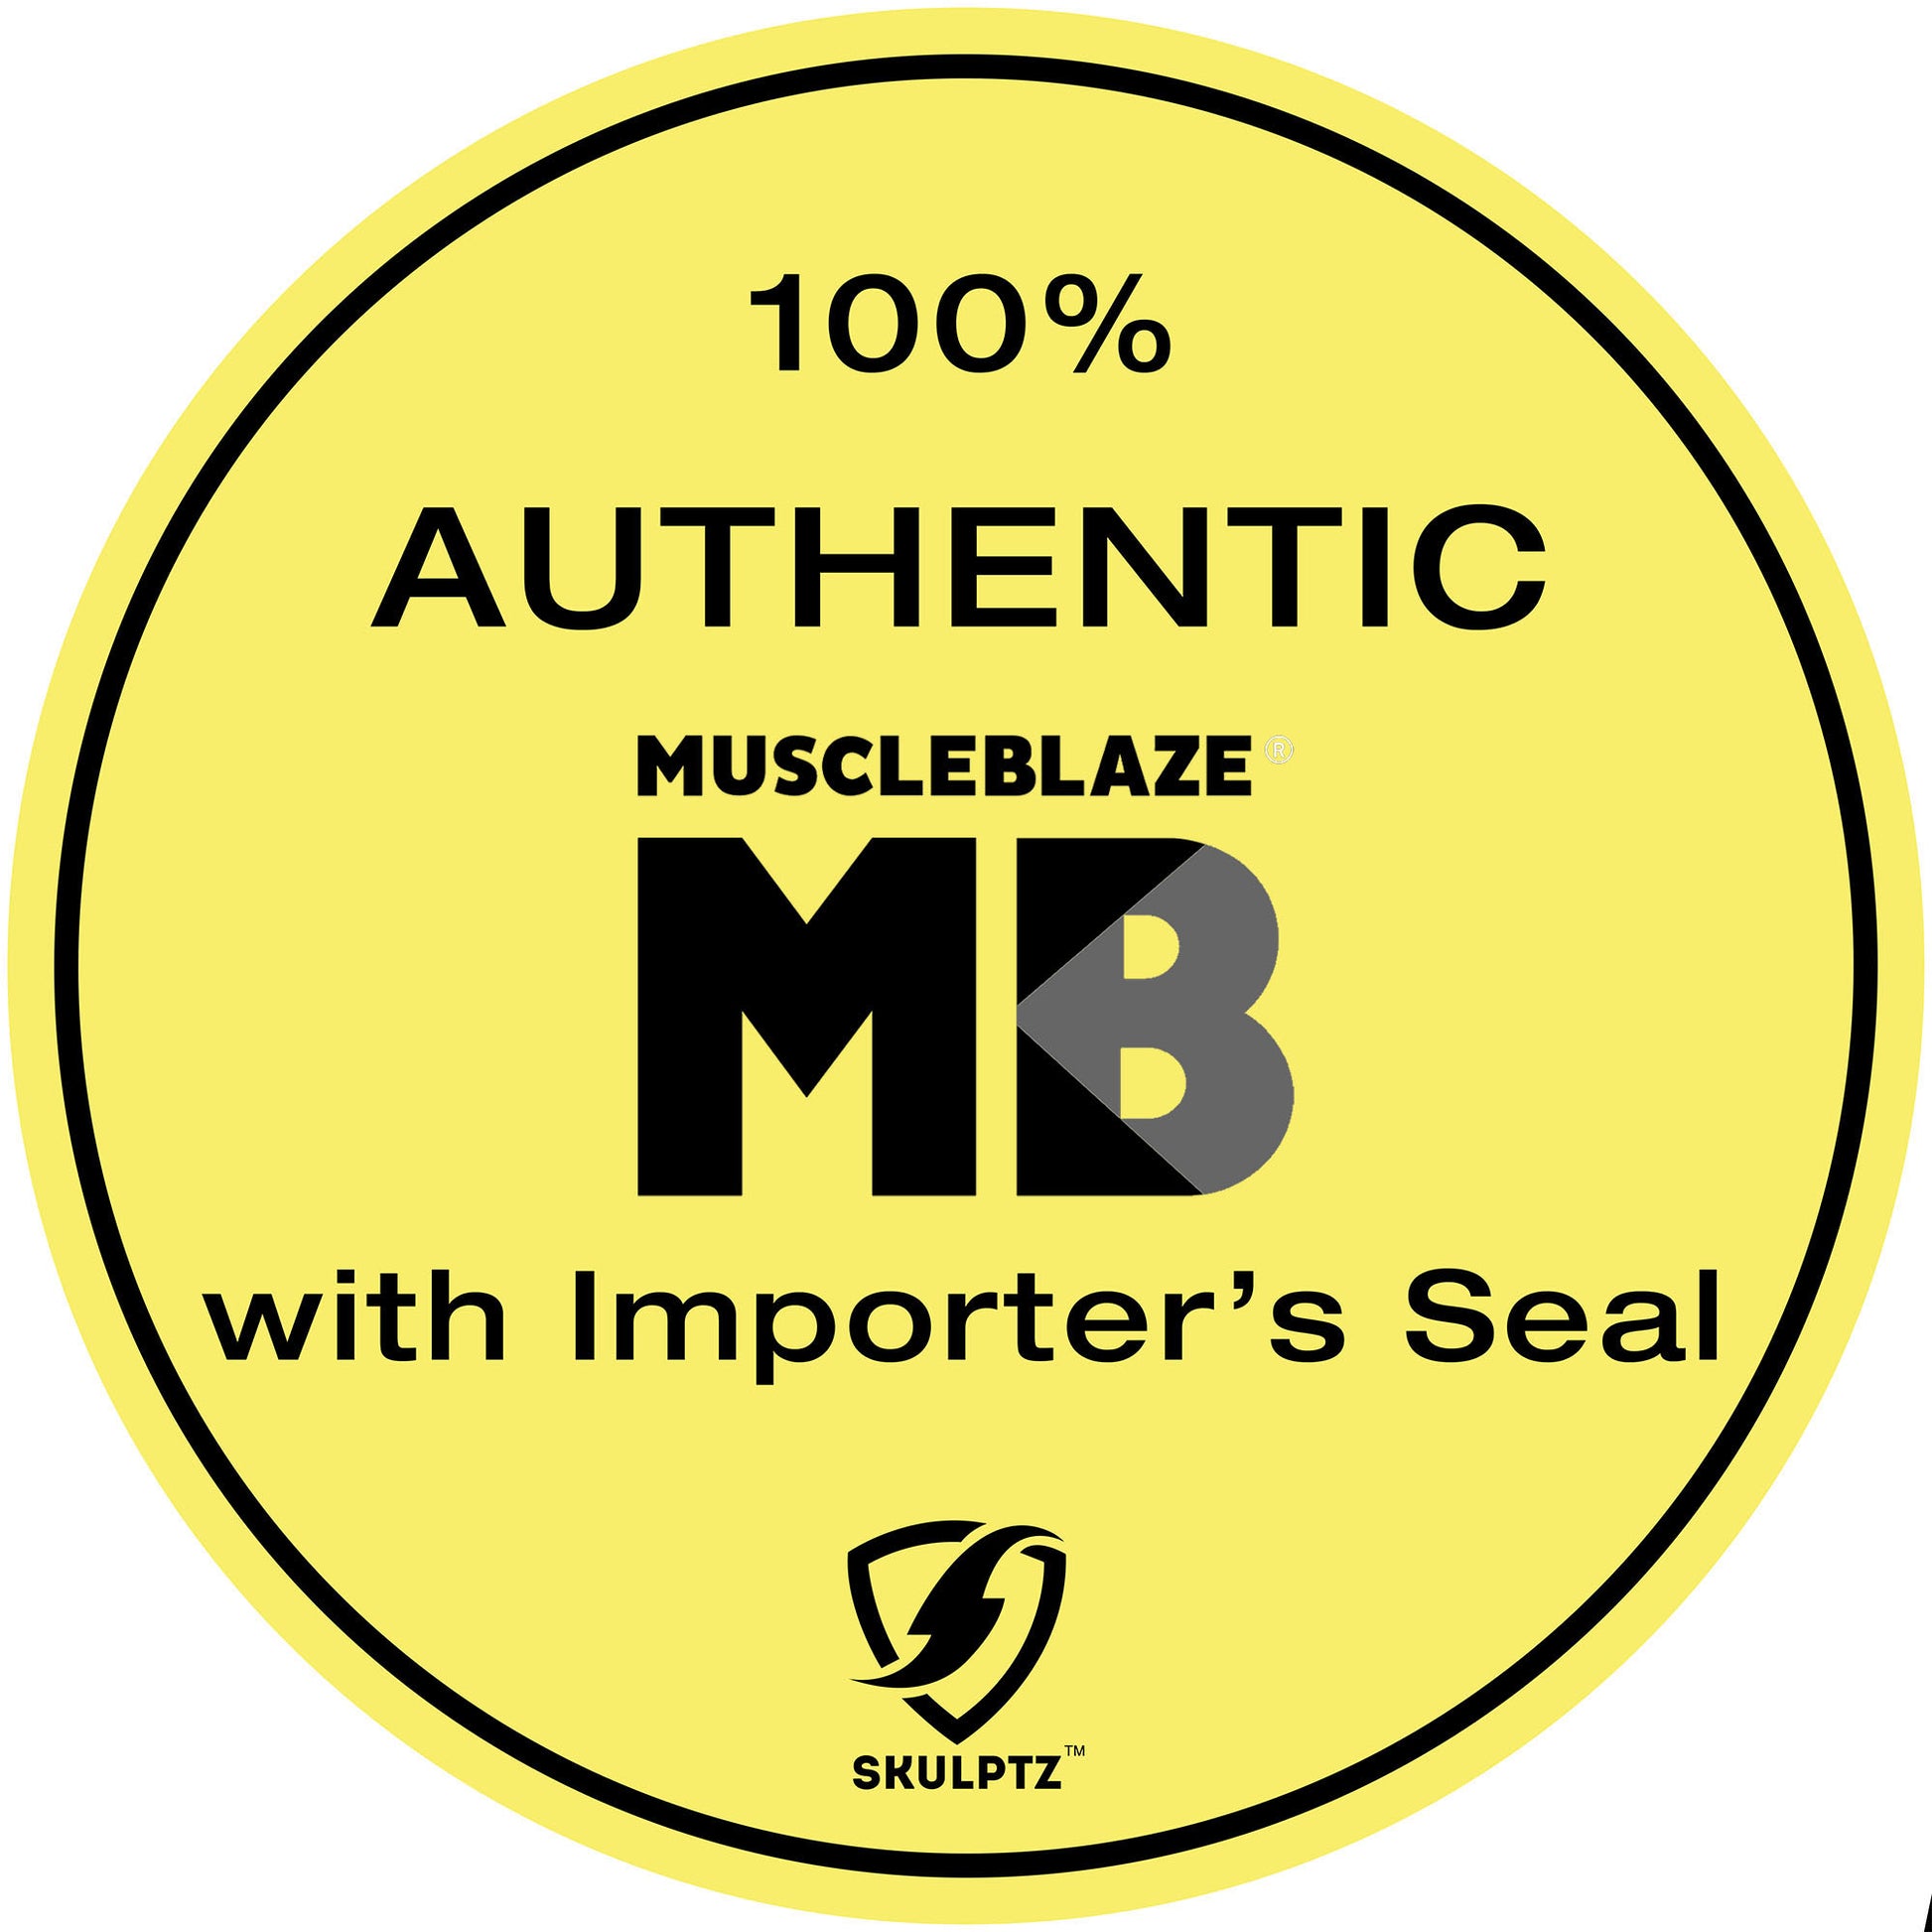 MuscleBlaze MB-Vite Multi Vitamins 60 - skulptz